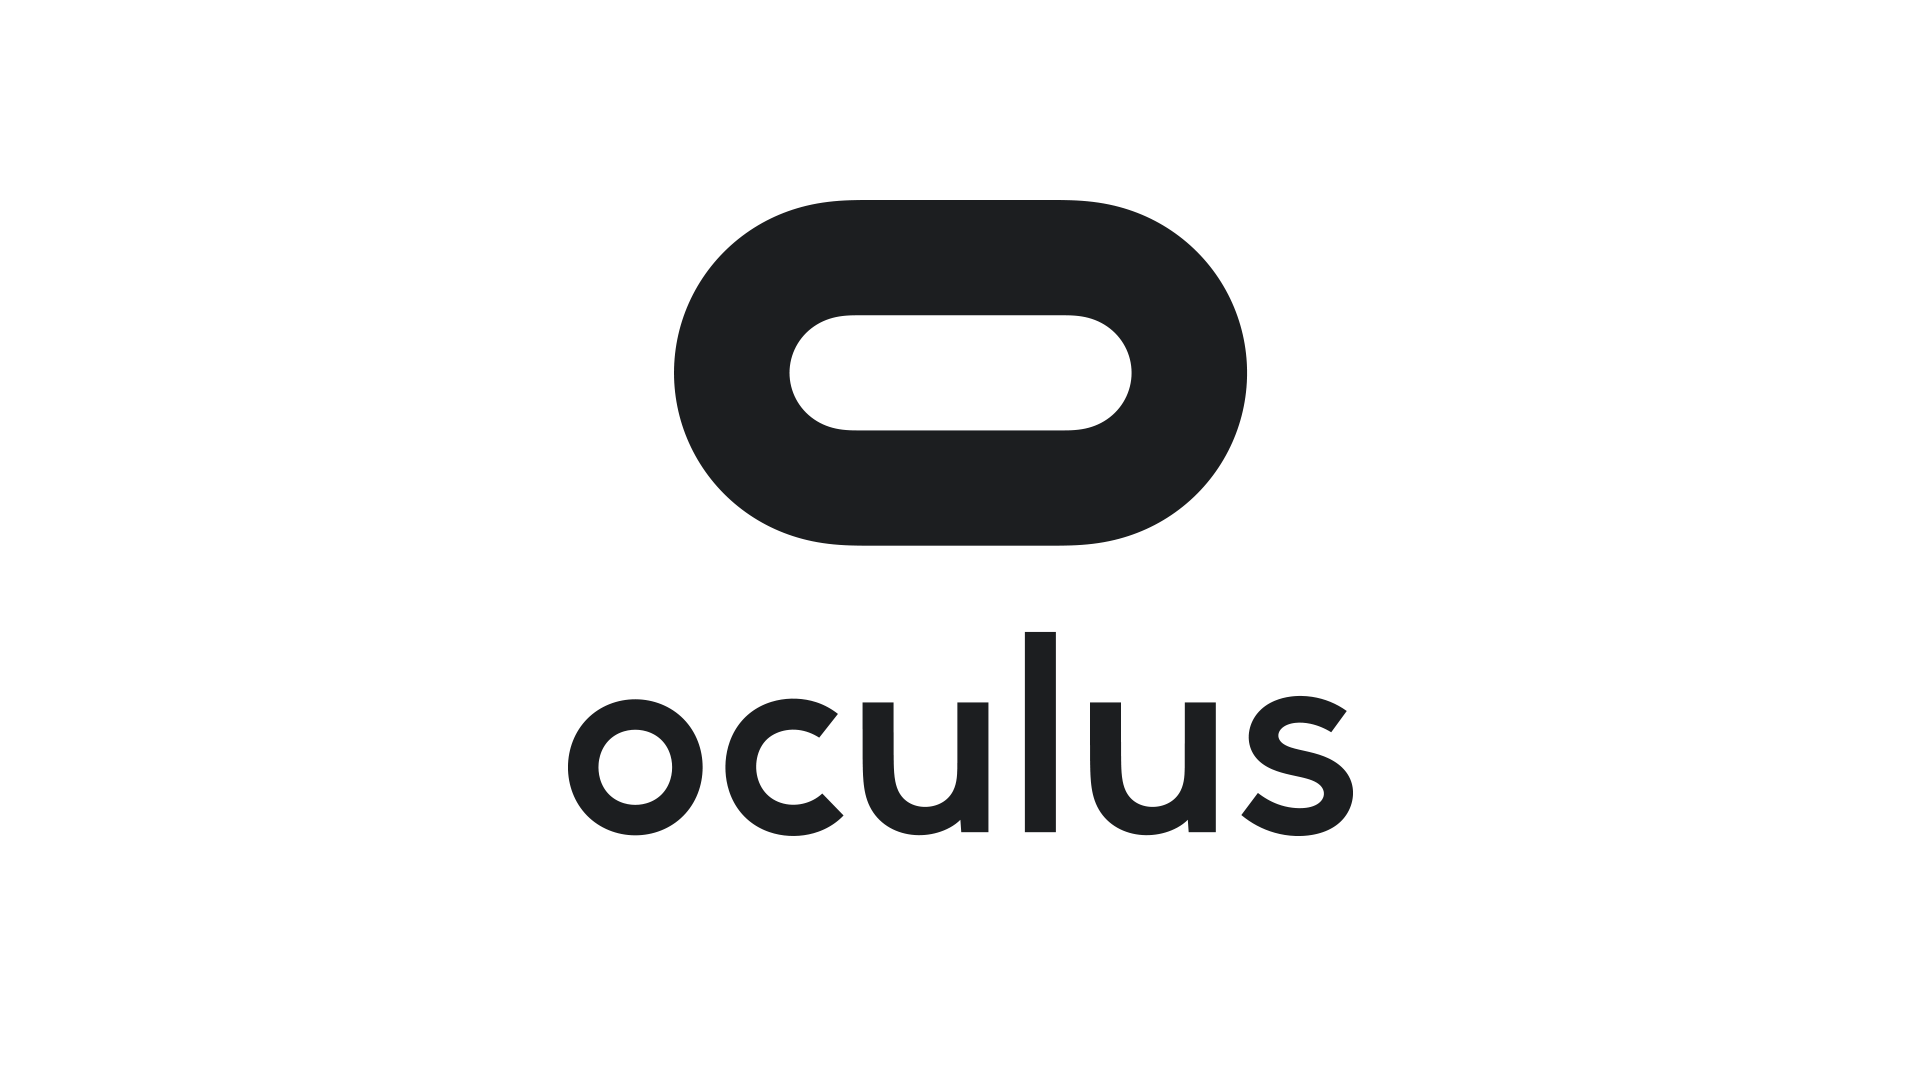 oculus rift stock options